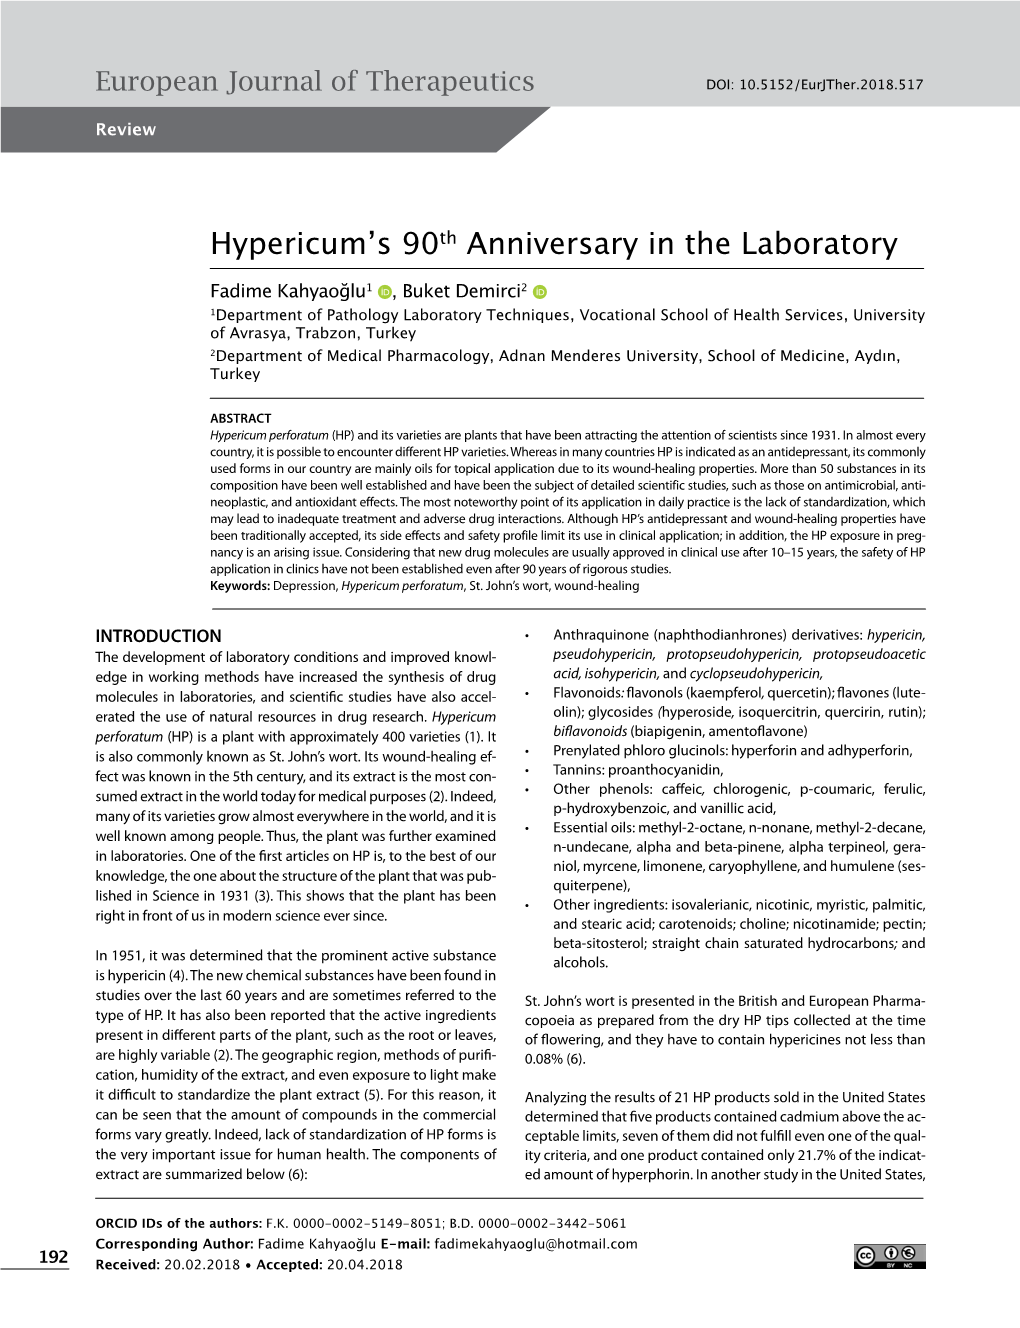 Hypericum's 90Th Anniversary in the Laboratory